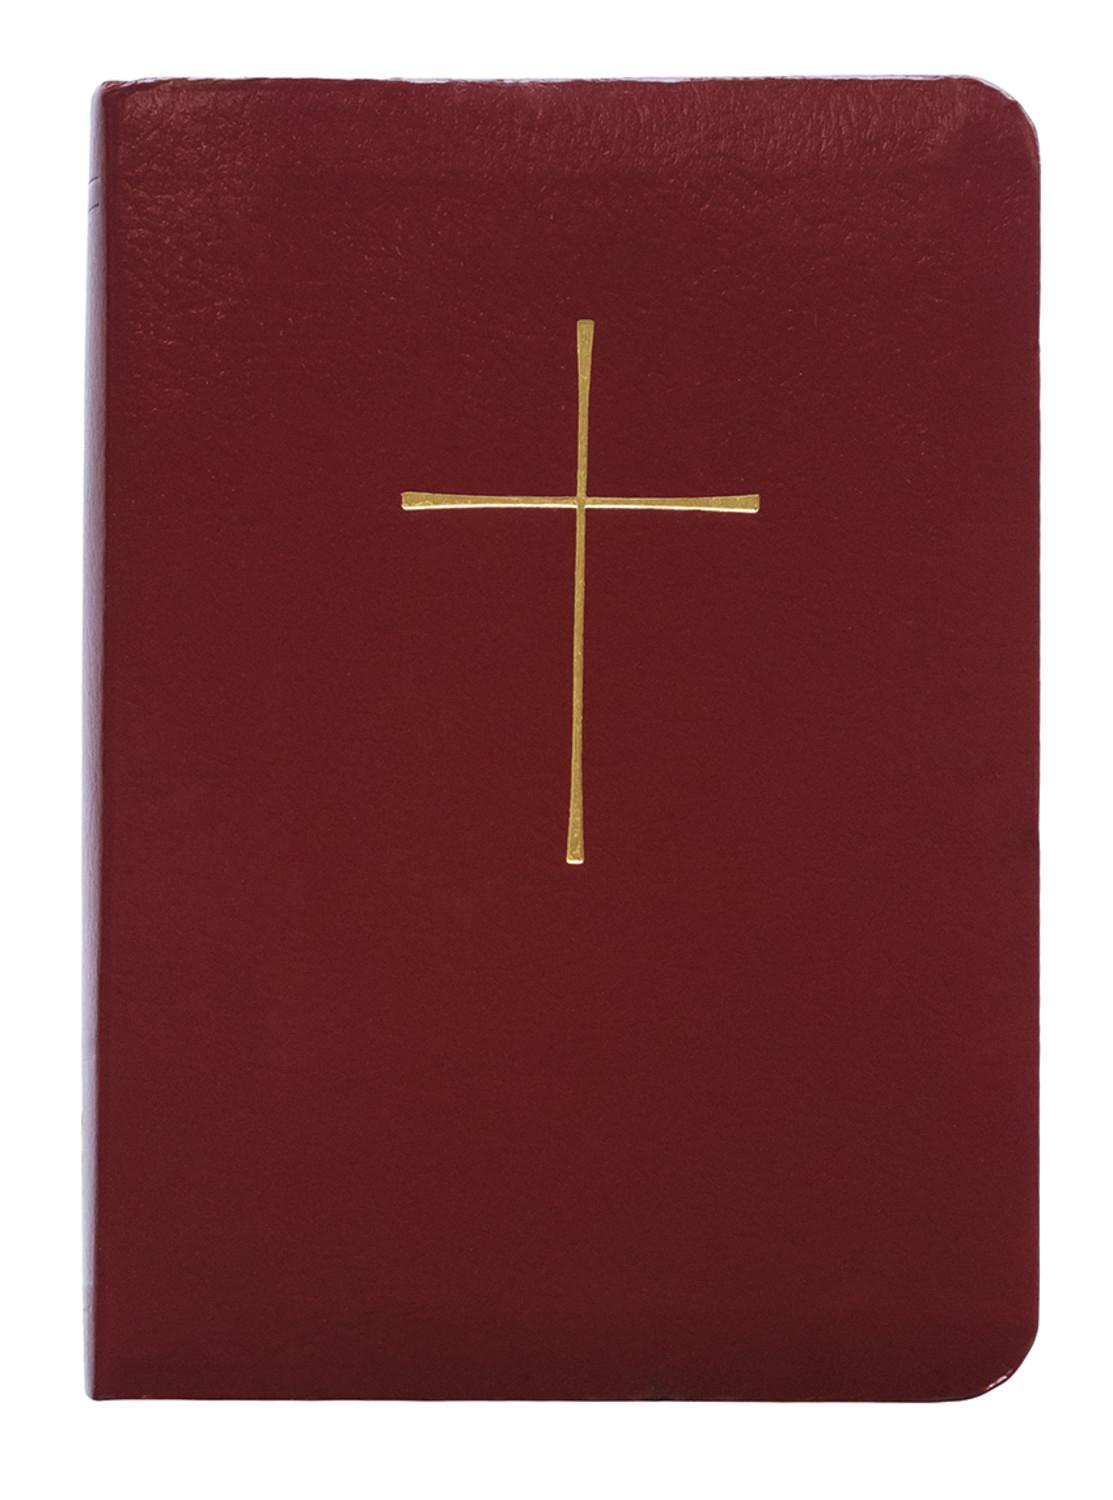 1979 Book of Common Prayer, Economy Edition: Burgundy - Church Publishing